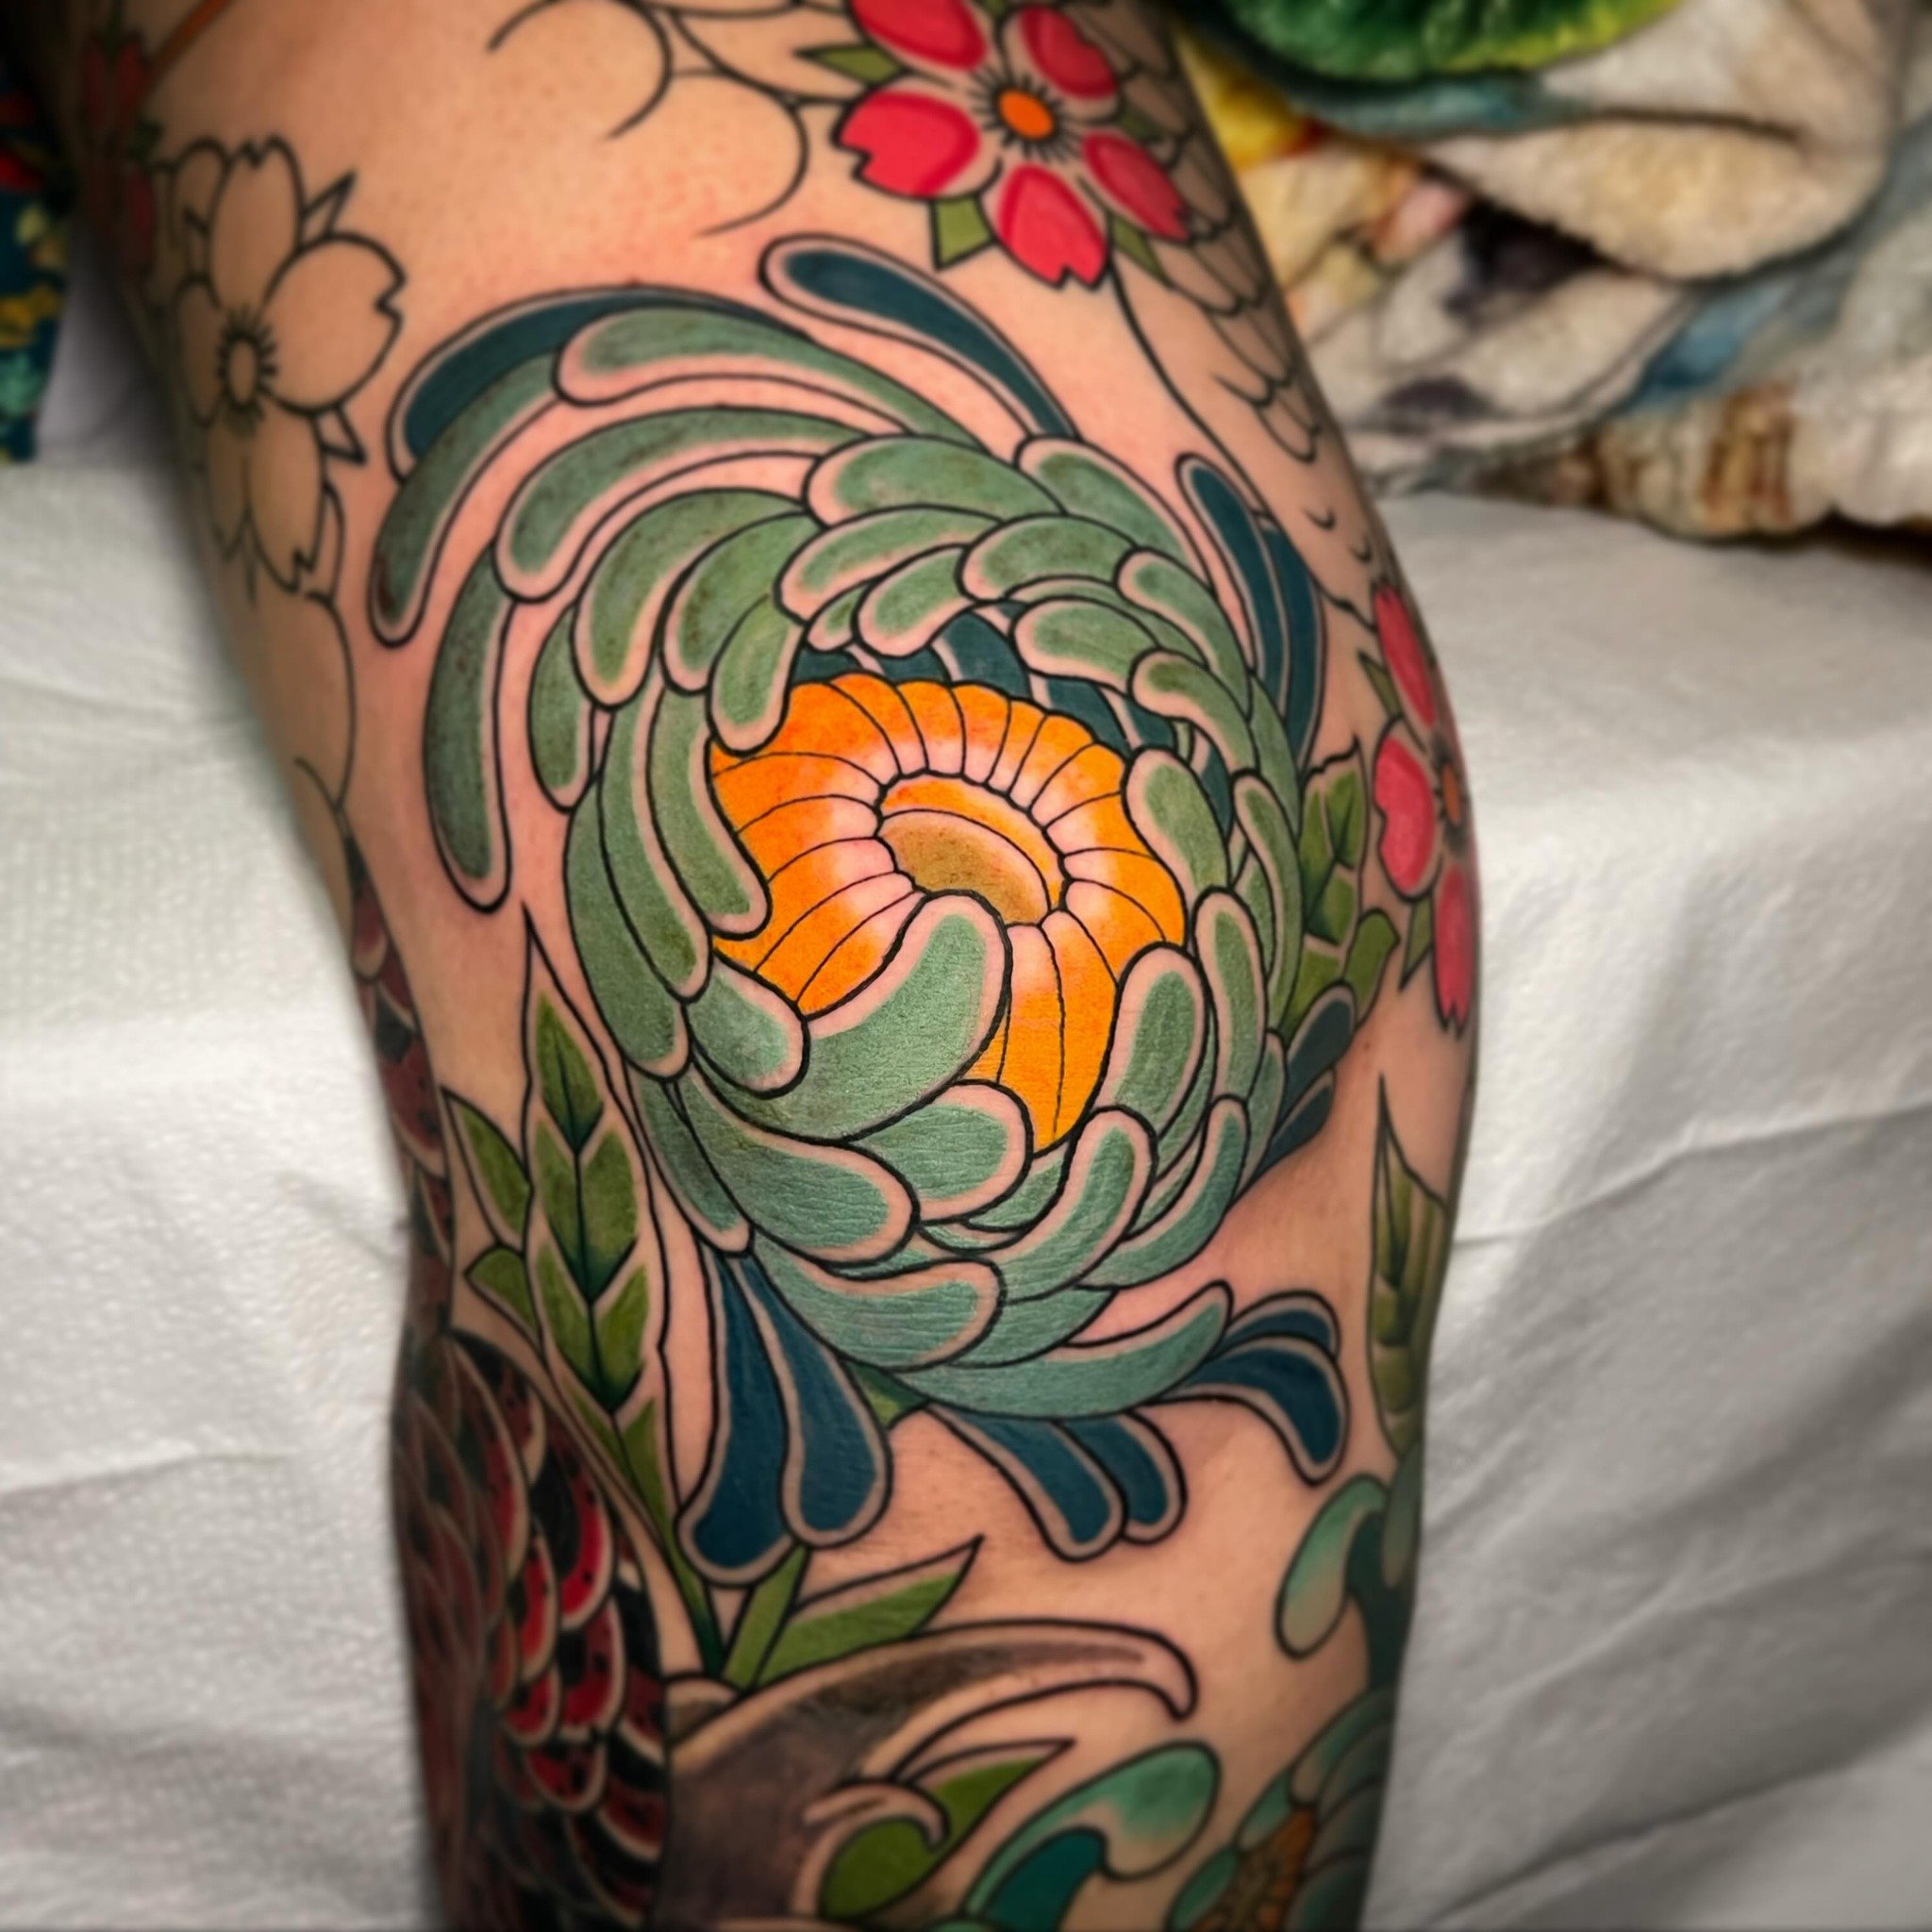 Part of a big leg sleeve in progress!! So stoked!!!! 
.
.
#flower #flowertattoo #tattoo #tattoos #ink #inked #trad #colortattoo #art #artist #pain #sleeve #legsleeve #inkedgirl #inkedgirls #kneetattoo #kneecap #ftcollins #uw #co #colorado #laramie #w